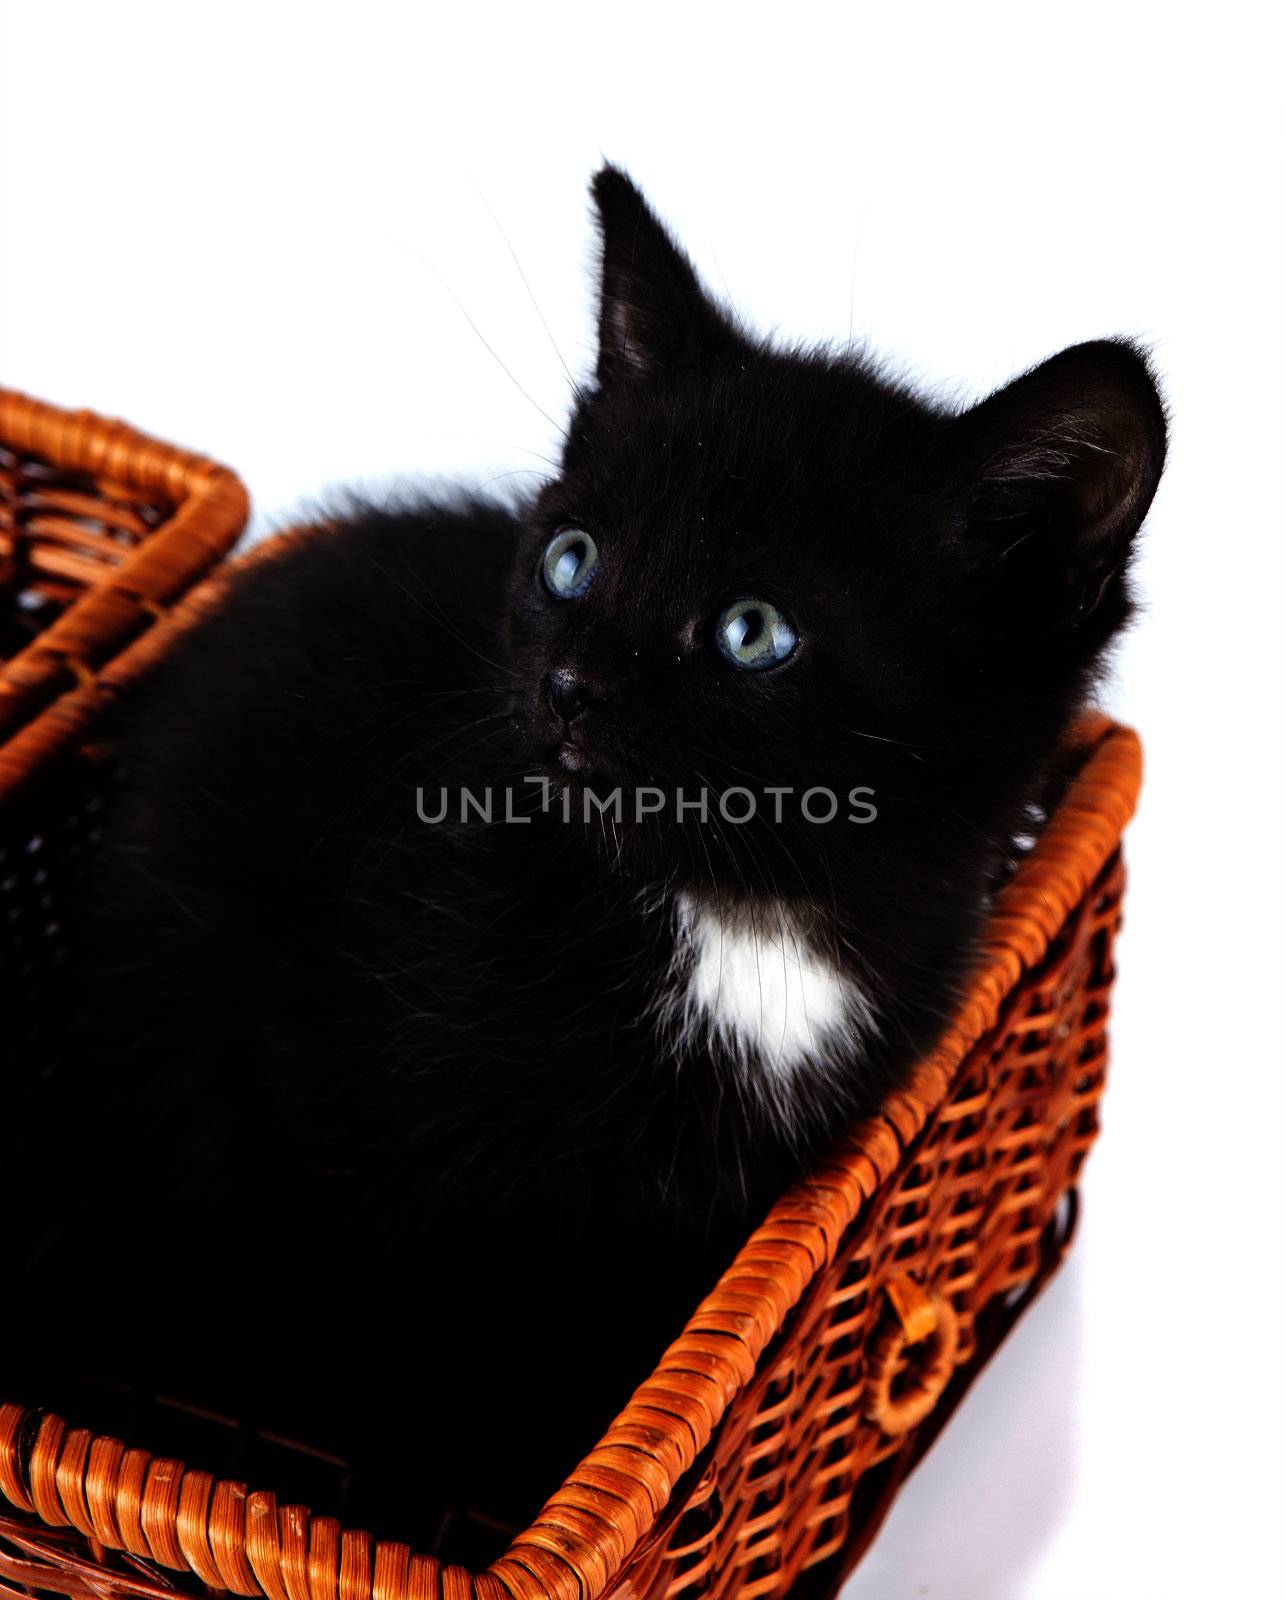 Black small kitten in a basket. Kitten on a white background. Small predator.